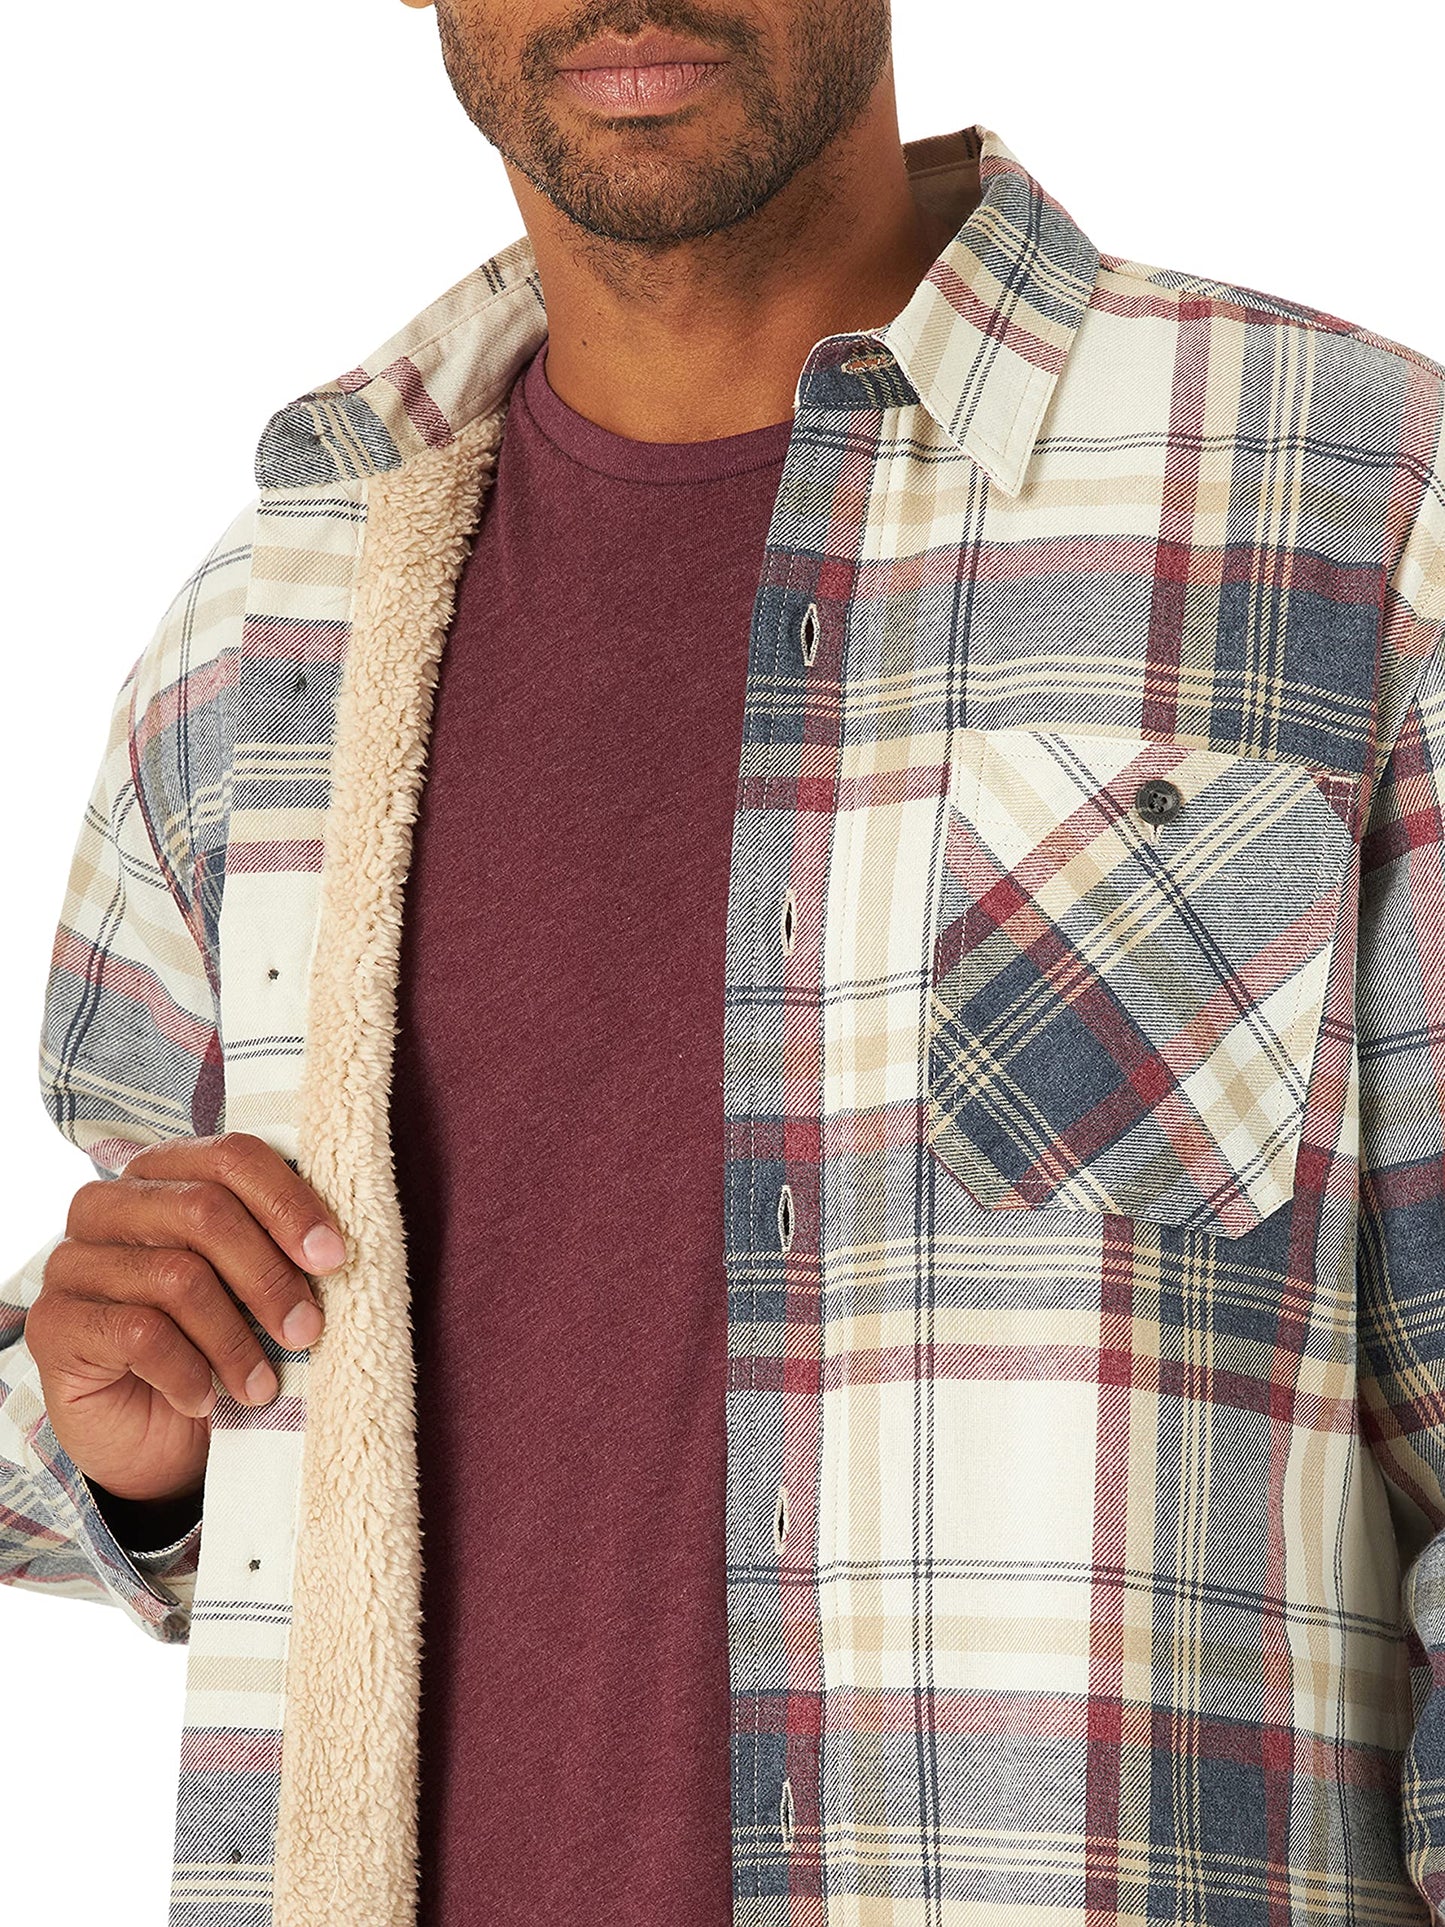 Wrangler Authentics Men's Long Sleeve Sherpa Lined Shirt Jacket, Light Beige Heather, Small